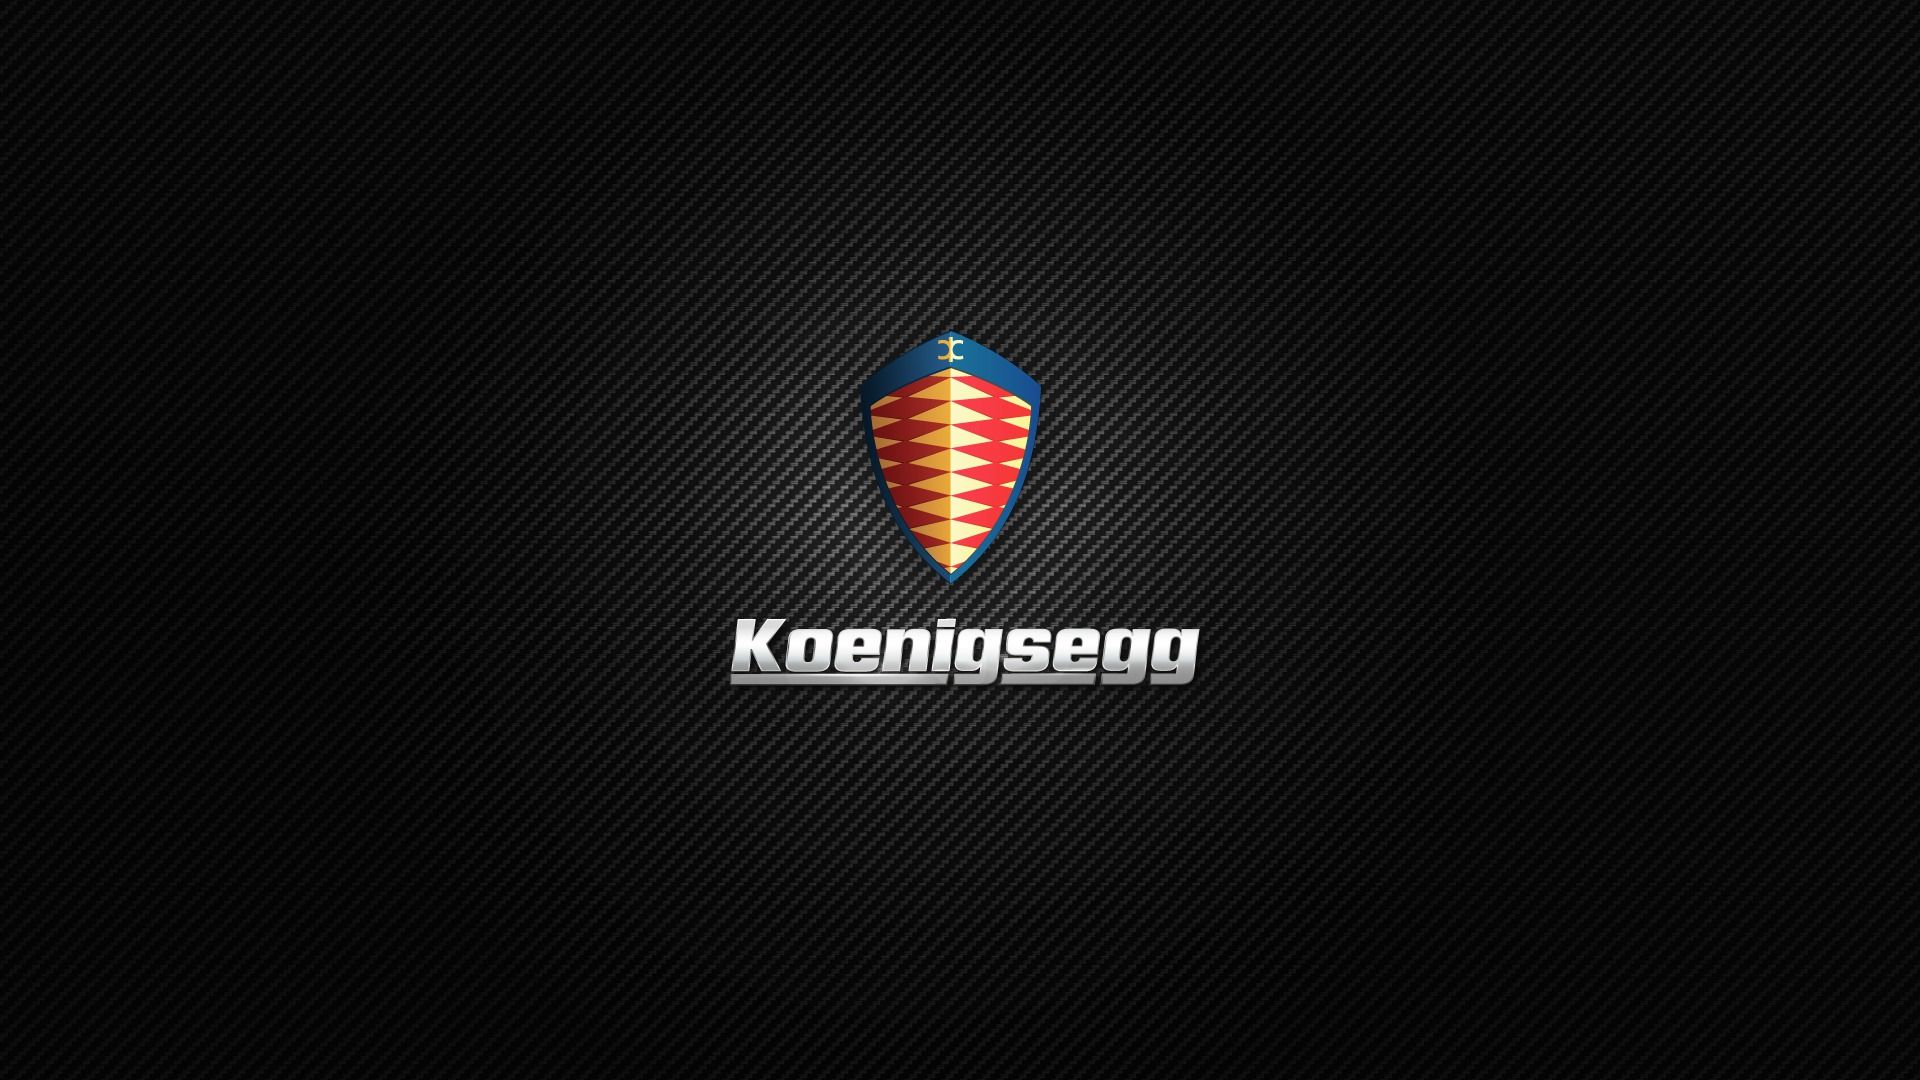 Koenigsegg Design Your Own Omg Carbon